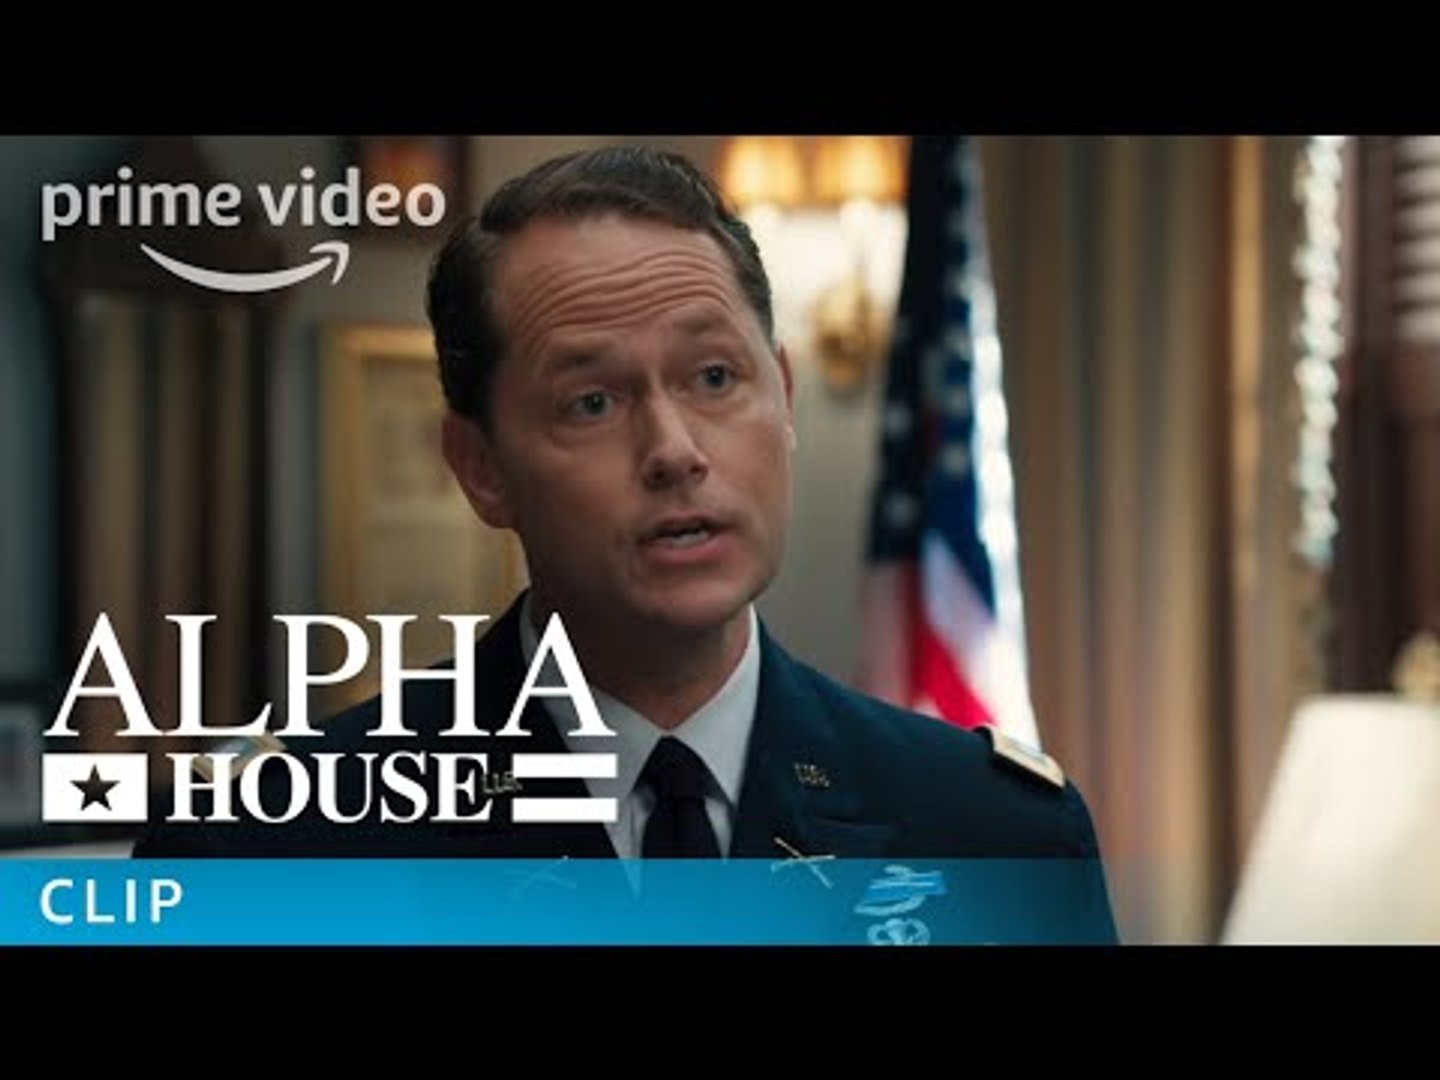 Prime Video: Alpha